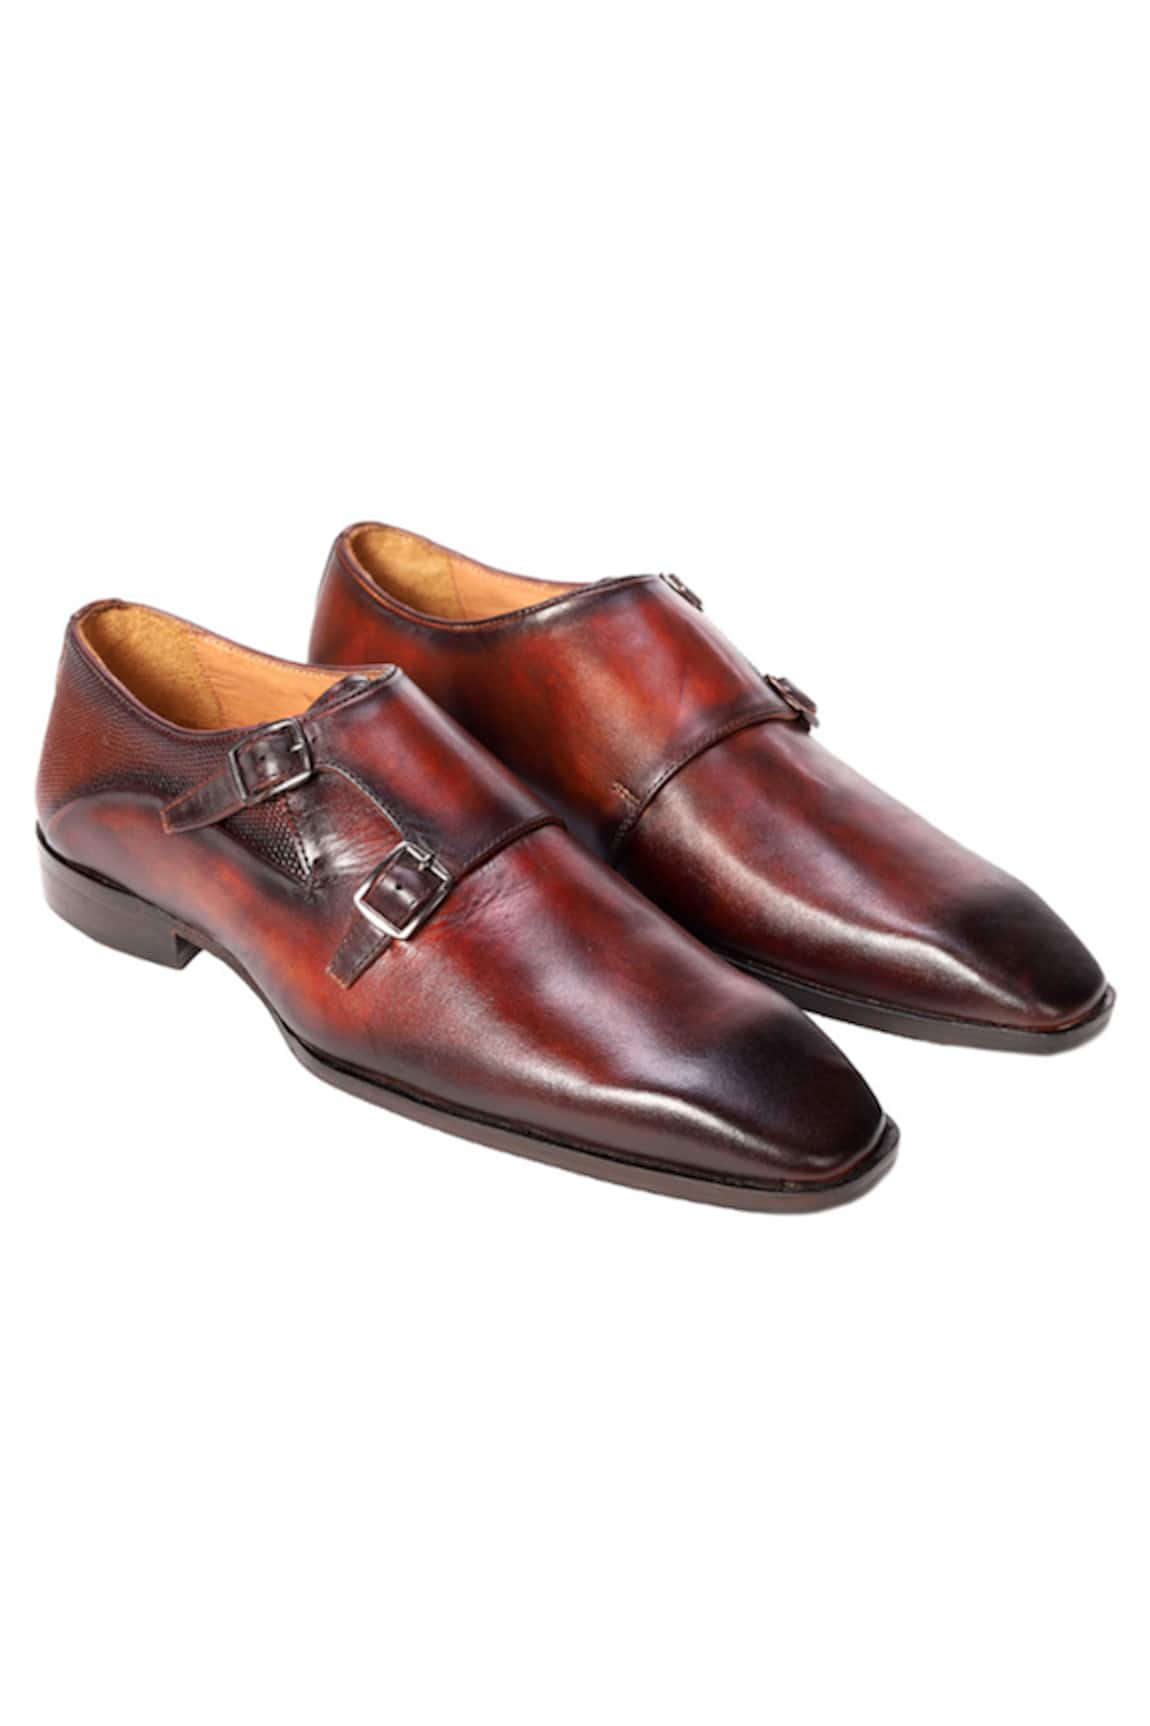 ZUFR Edison Calfskin Leather Monk Shoes